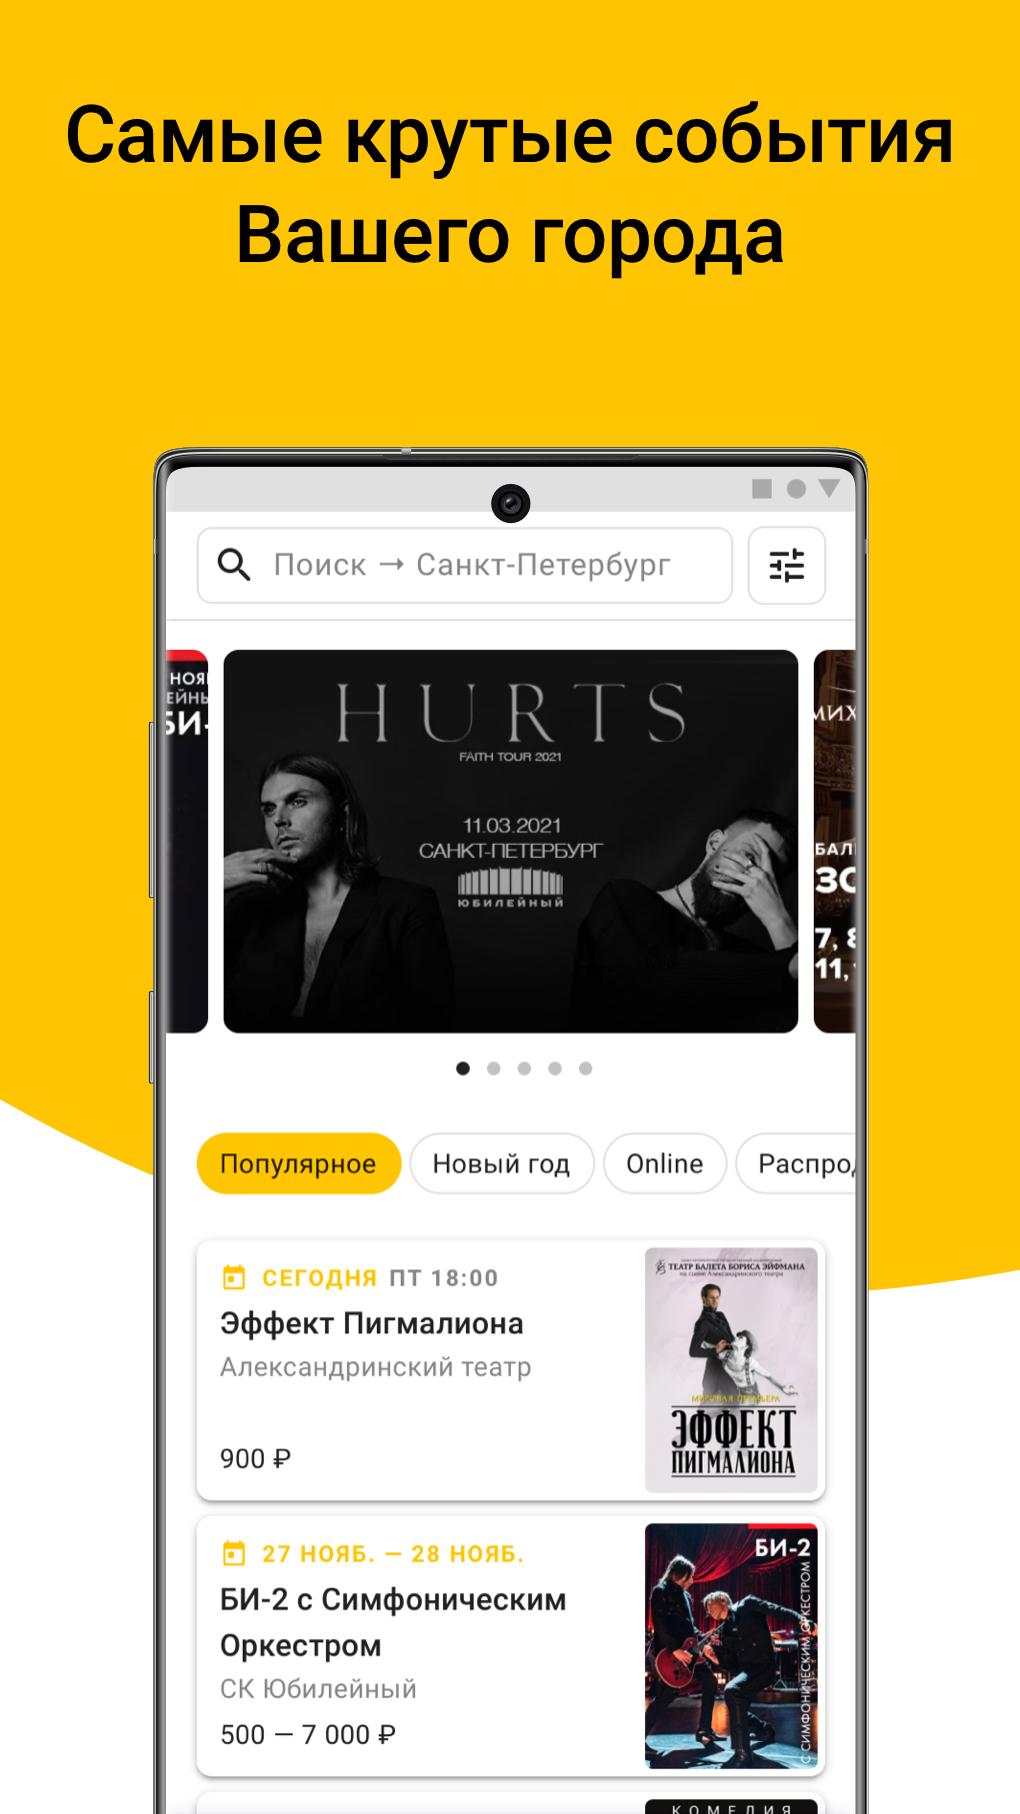 Kassir.Ru: Афиши и билеты на концерты и спектакли 1.0.2 Screenshot 1